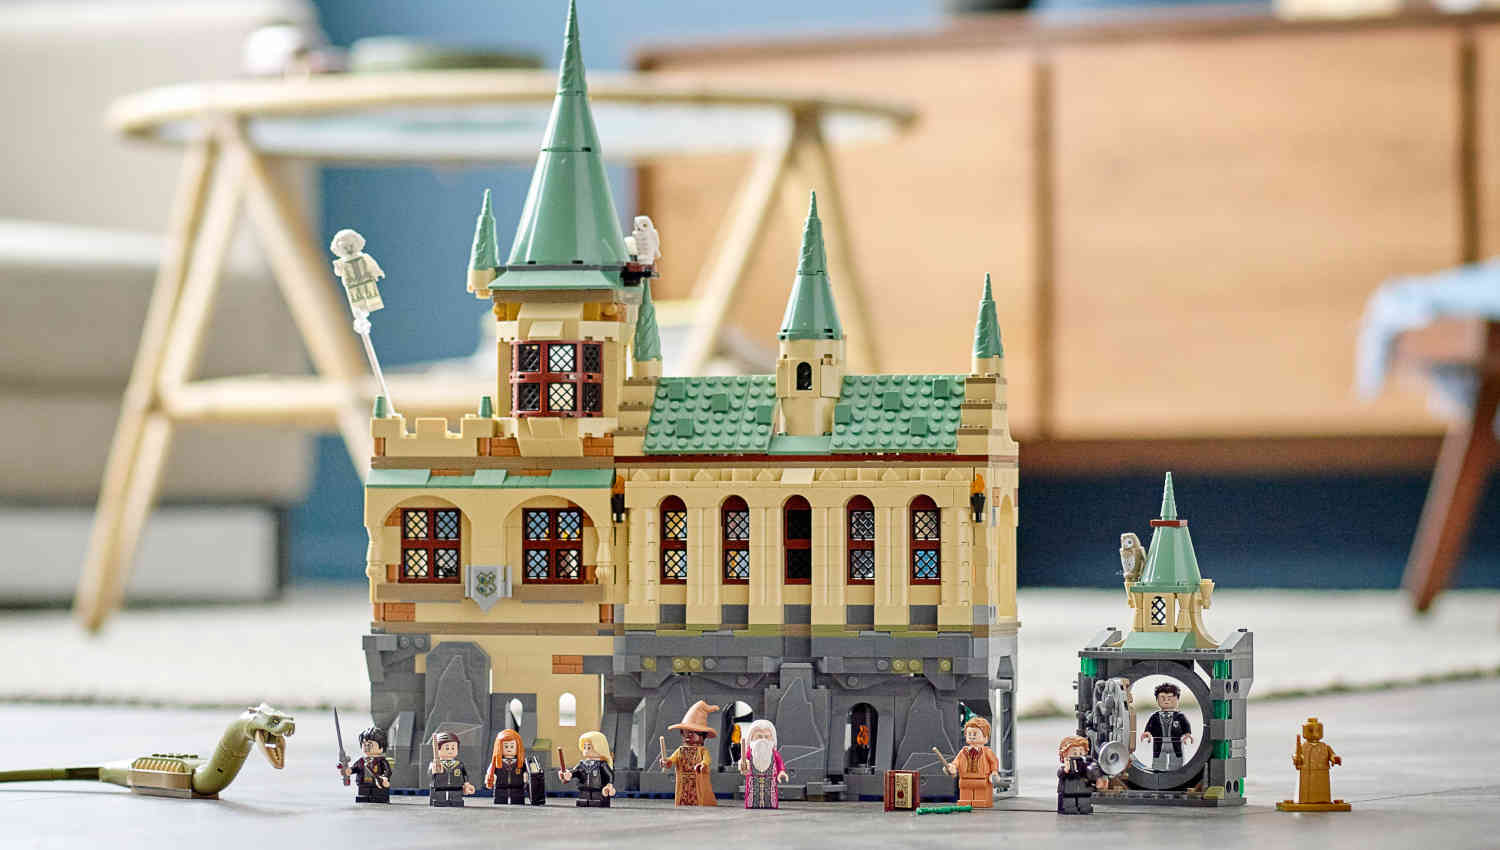 Lego Harry Potter: in arrivo i nuovi set del Wizarding World